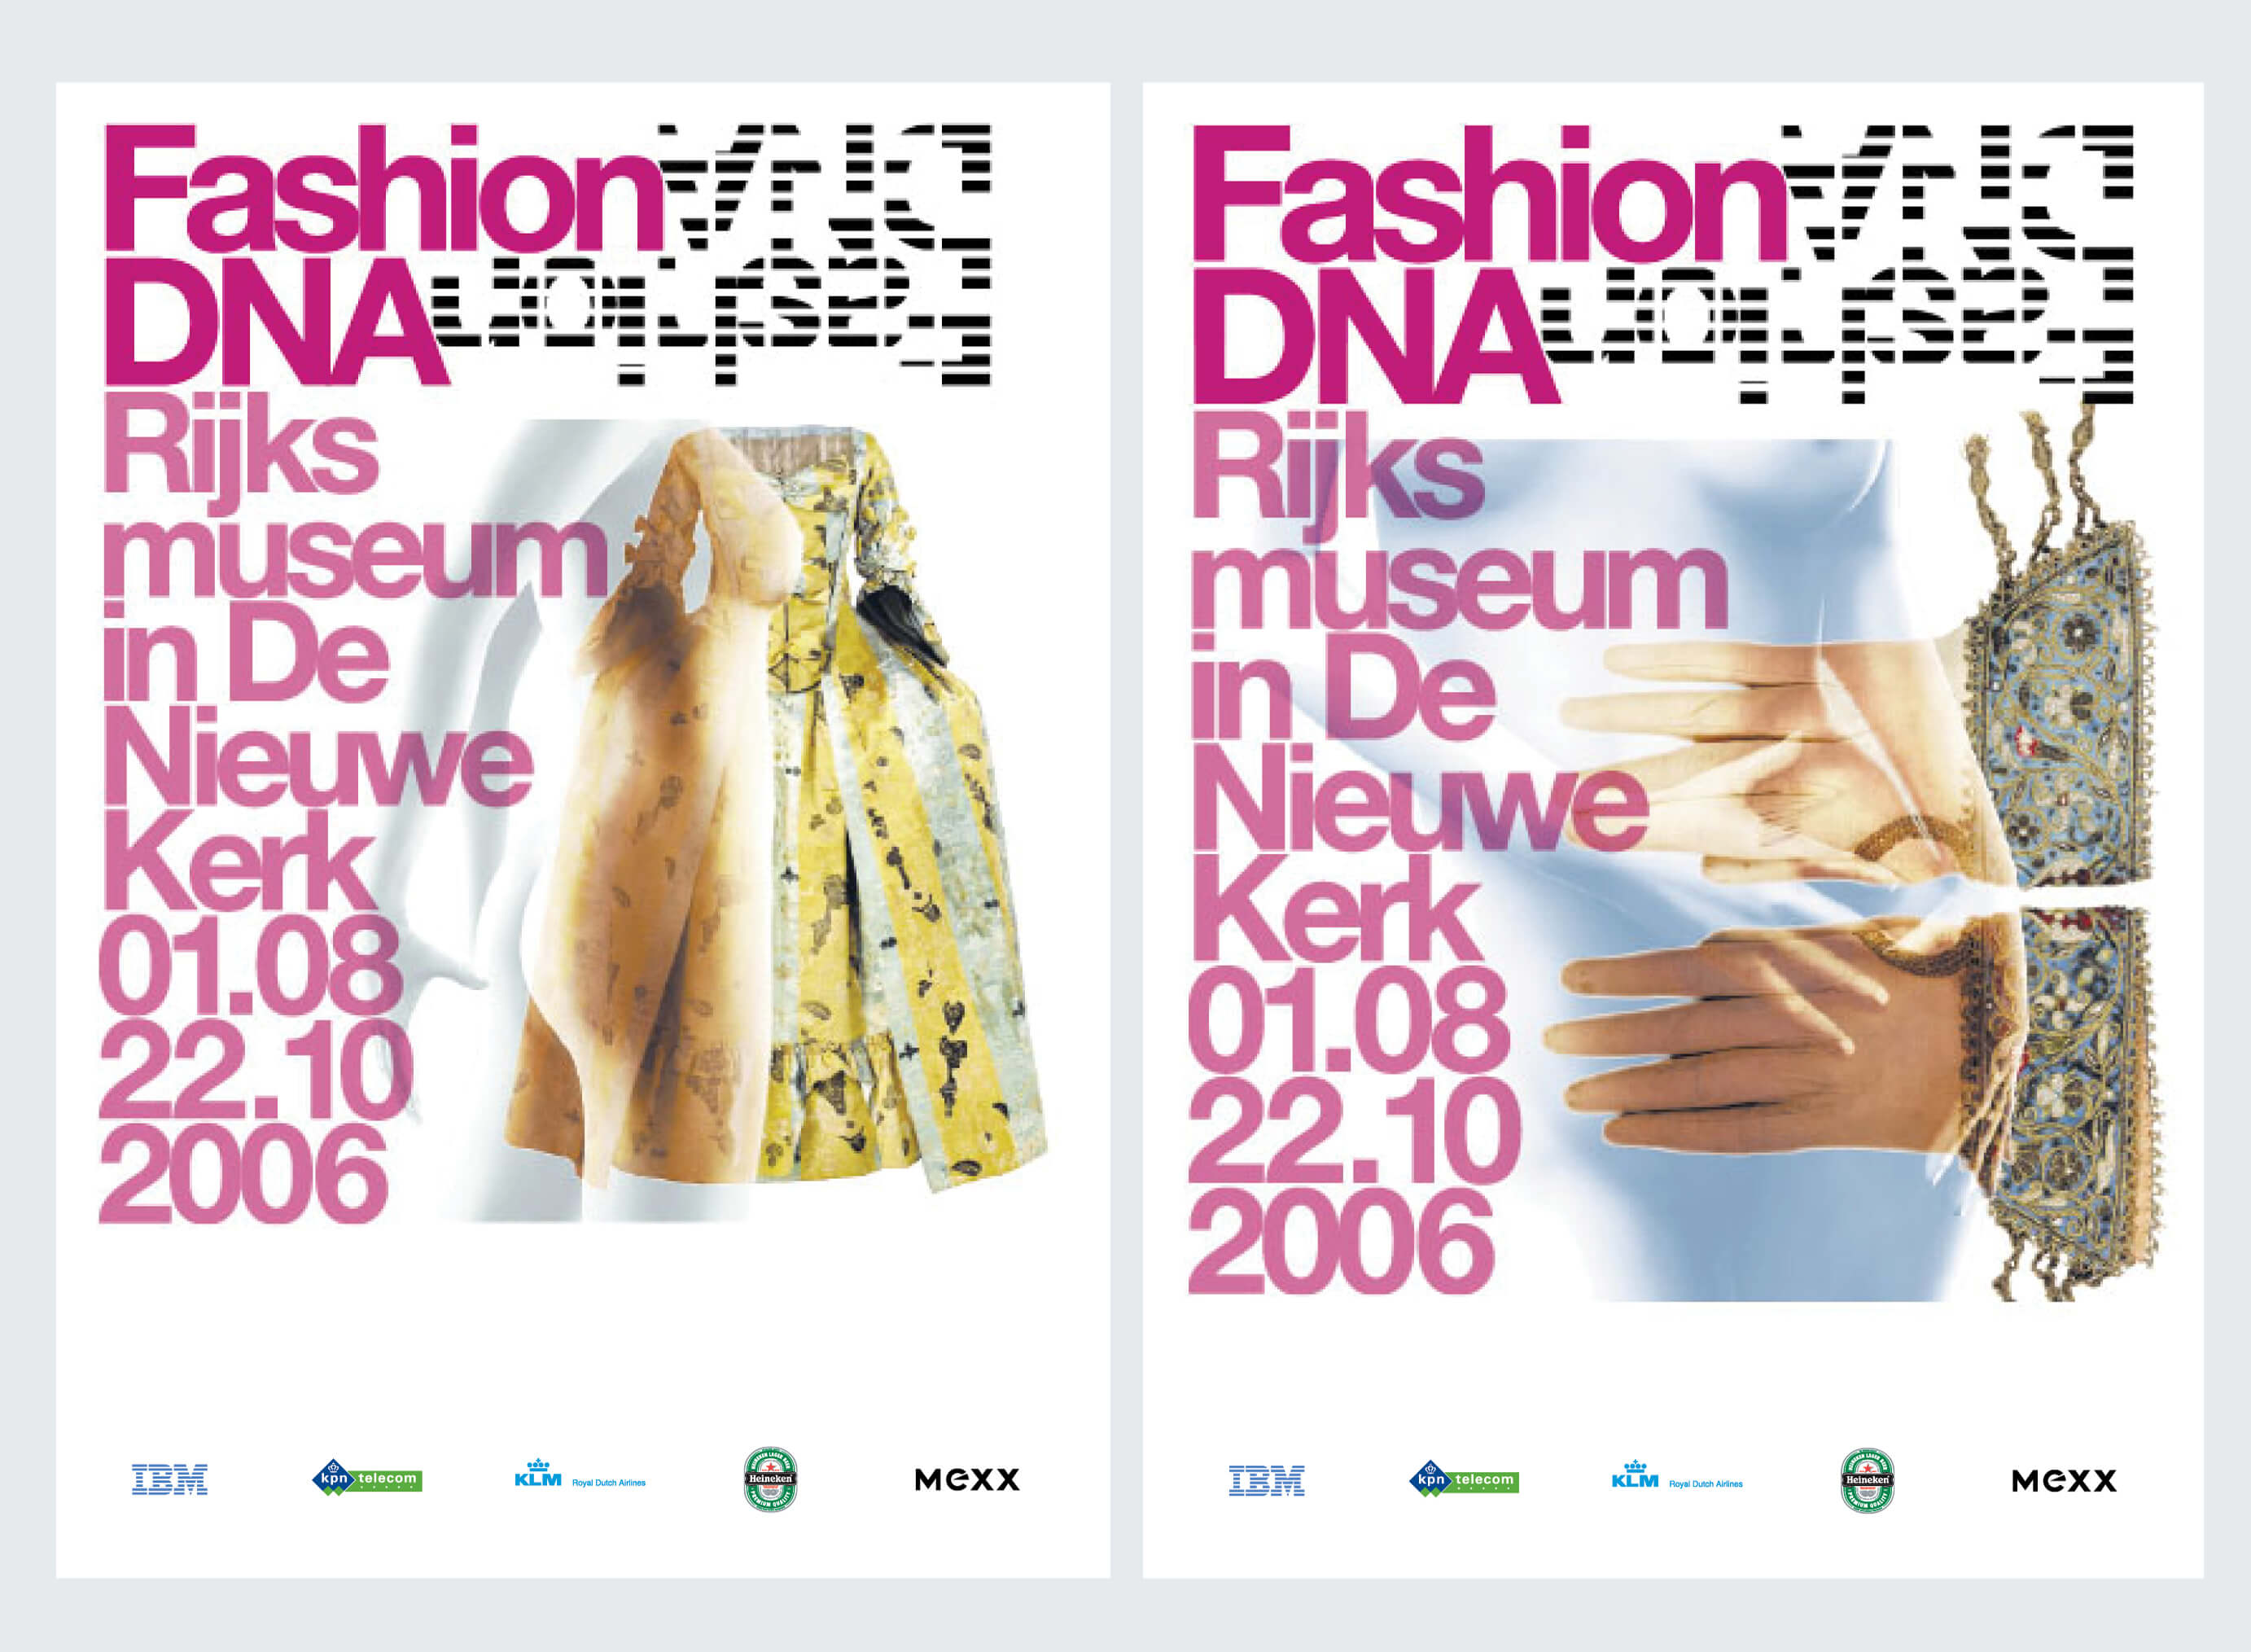 Fashion-DNA